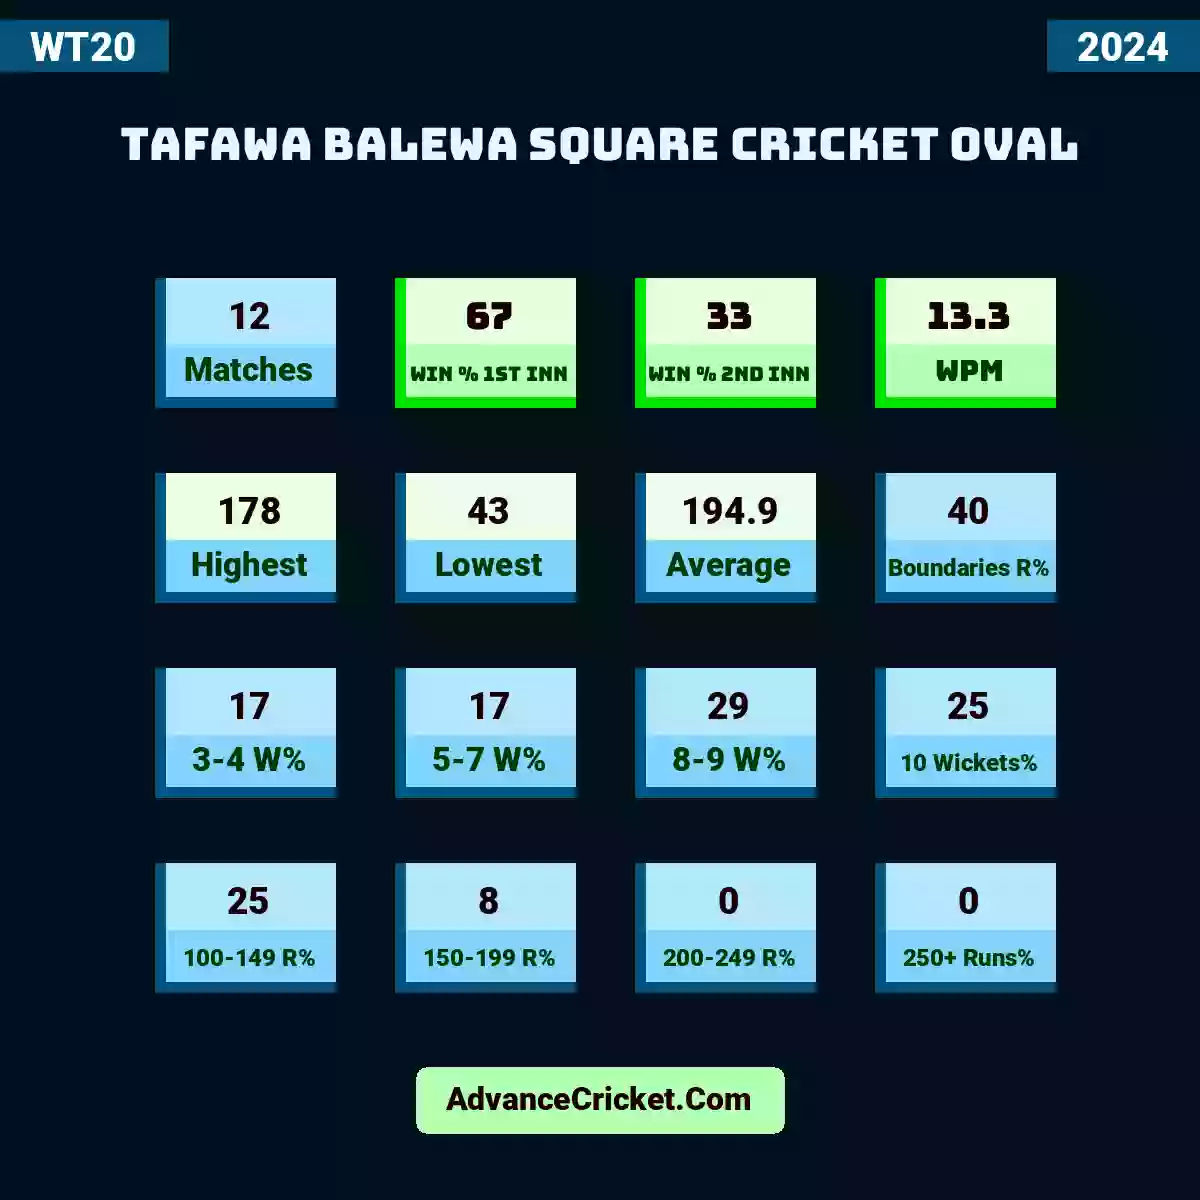 Image showing Tafawa Balewa Square Cricket Oval with Matches: 12, Win % 1st Inn: 67, Win % 2nd Inn: 33, WPM: 13.3, Highest: 178, Lowest: 43, Average: 194.9, Boundaries R%: 40, 3-4 W%: 17, 5-7 W%: 17, 8-9 W%: 29, 10 Wickets%: 25, 100-149 R%: 25, 150-199 R%: 8, 200-249 R%: 0, 250+ Runs%: 0.